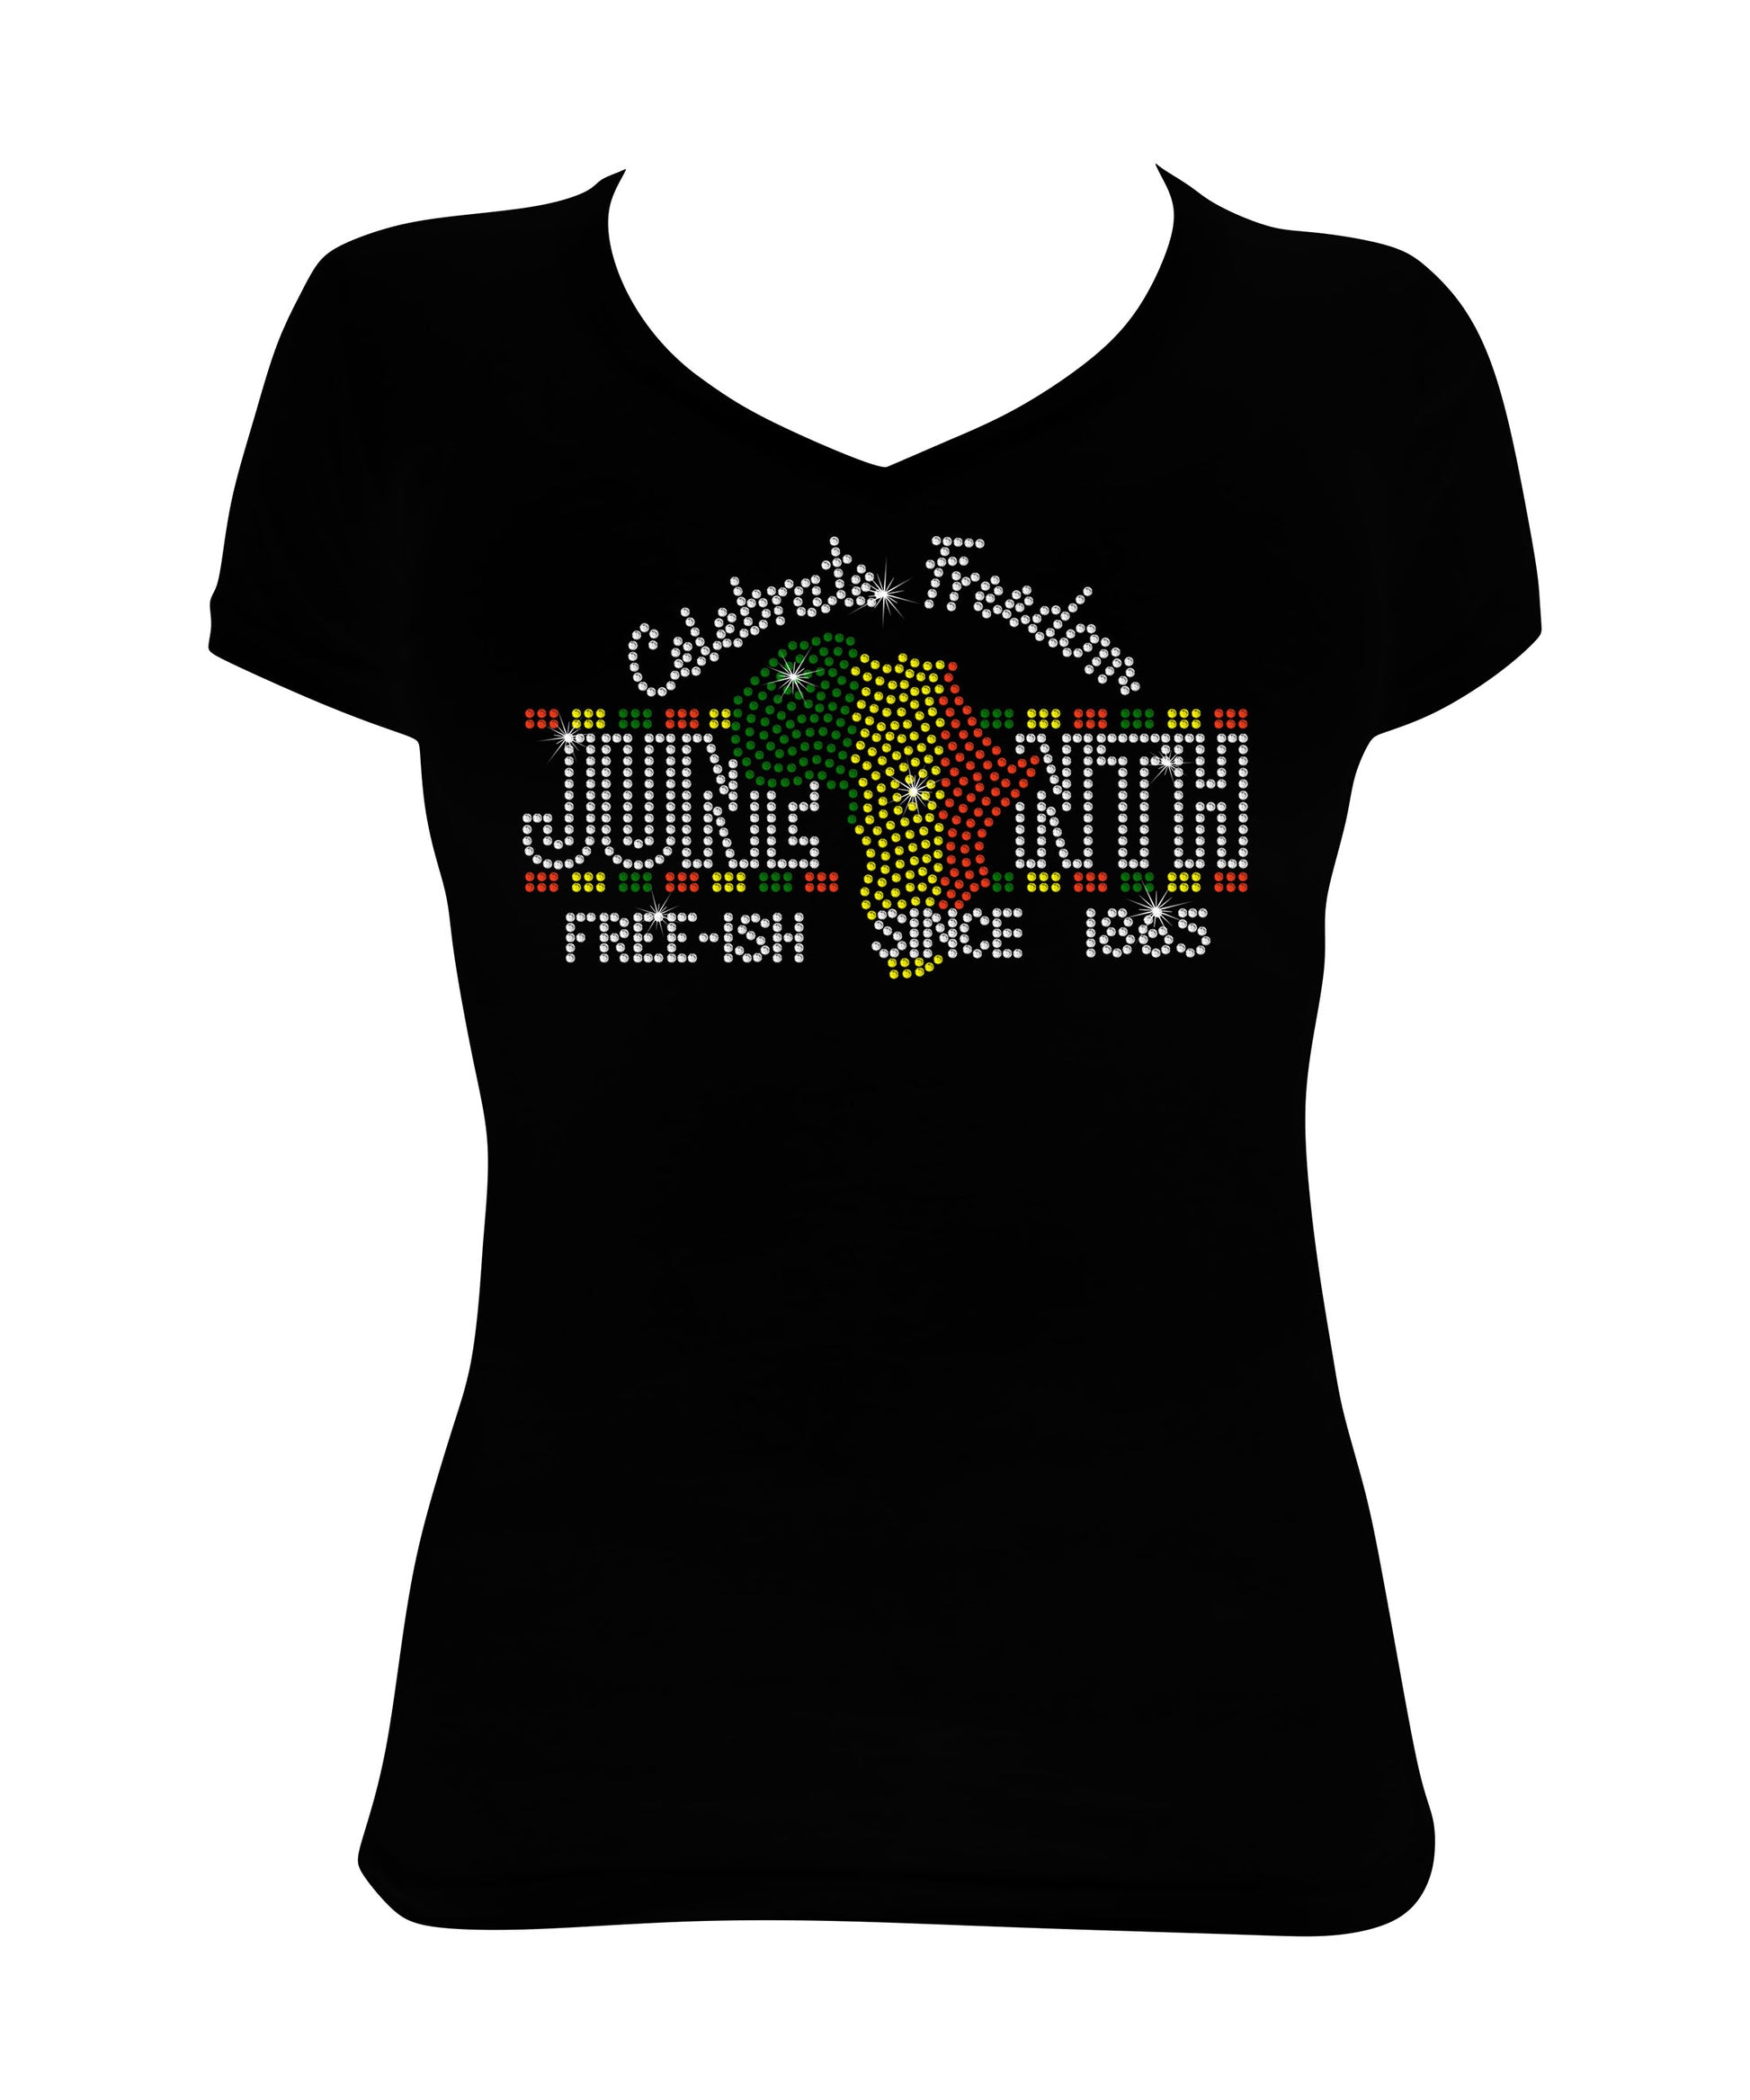 Celebrate Freedom - Juneteenth, Free-ish, 1865, Juneteenth Shirt